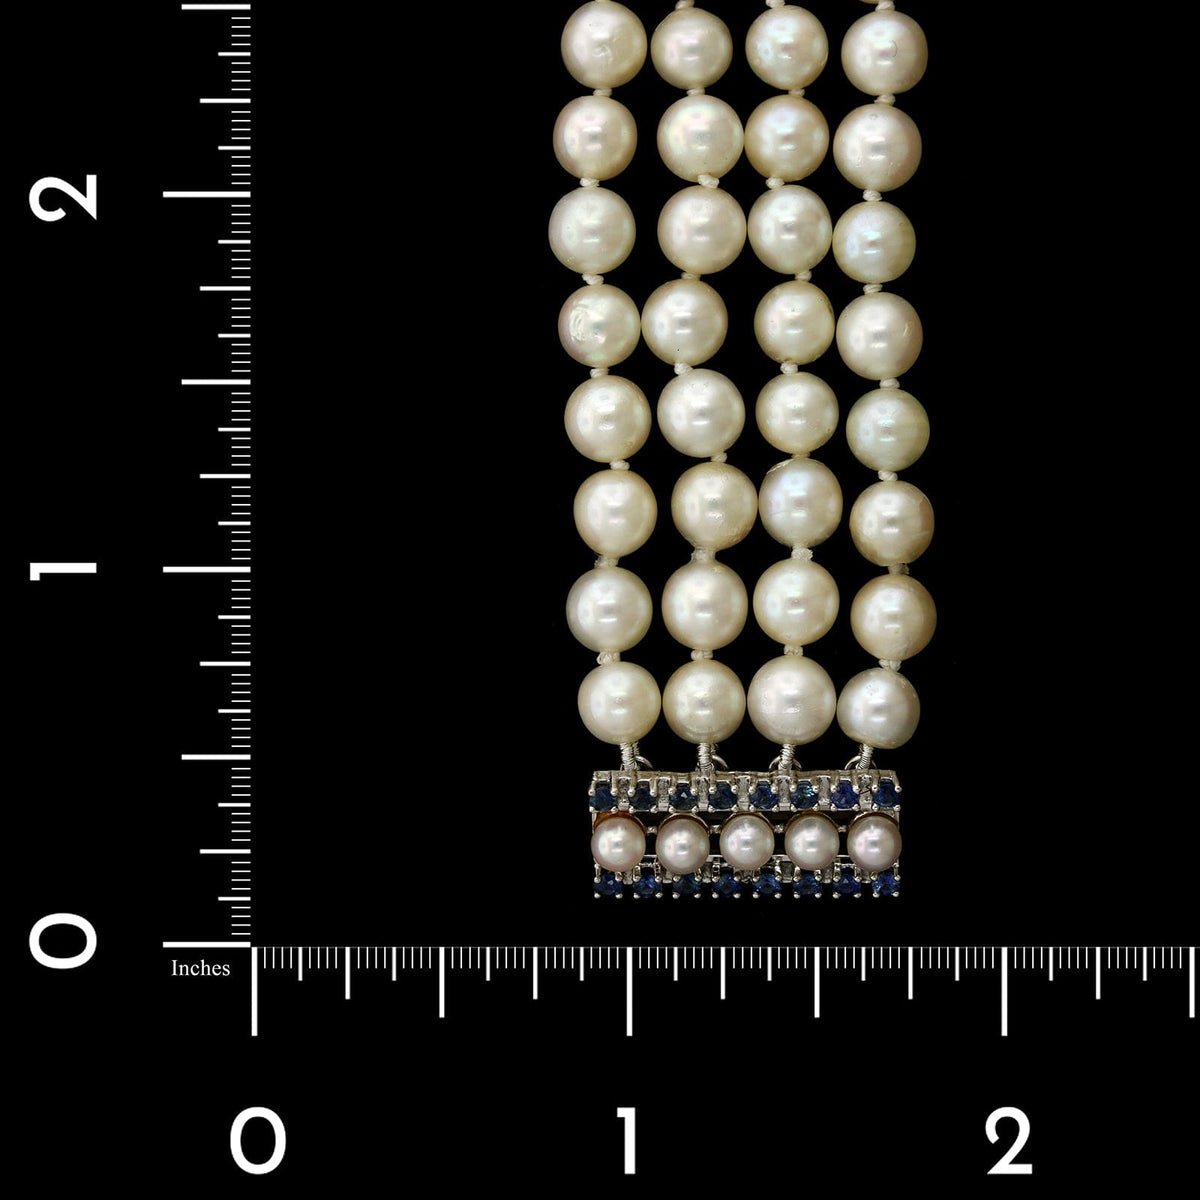 Freshwater Pearl and 18K Gold Metallic Sphere Bracelet